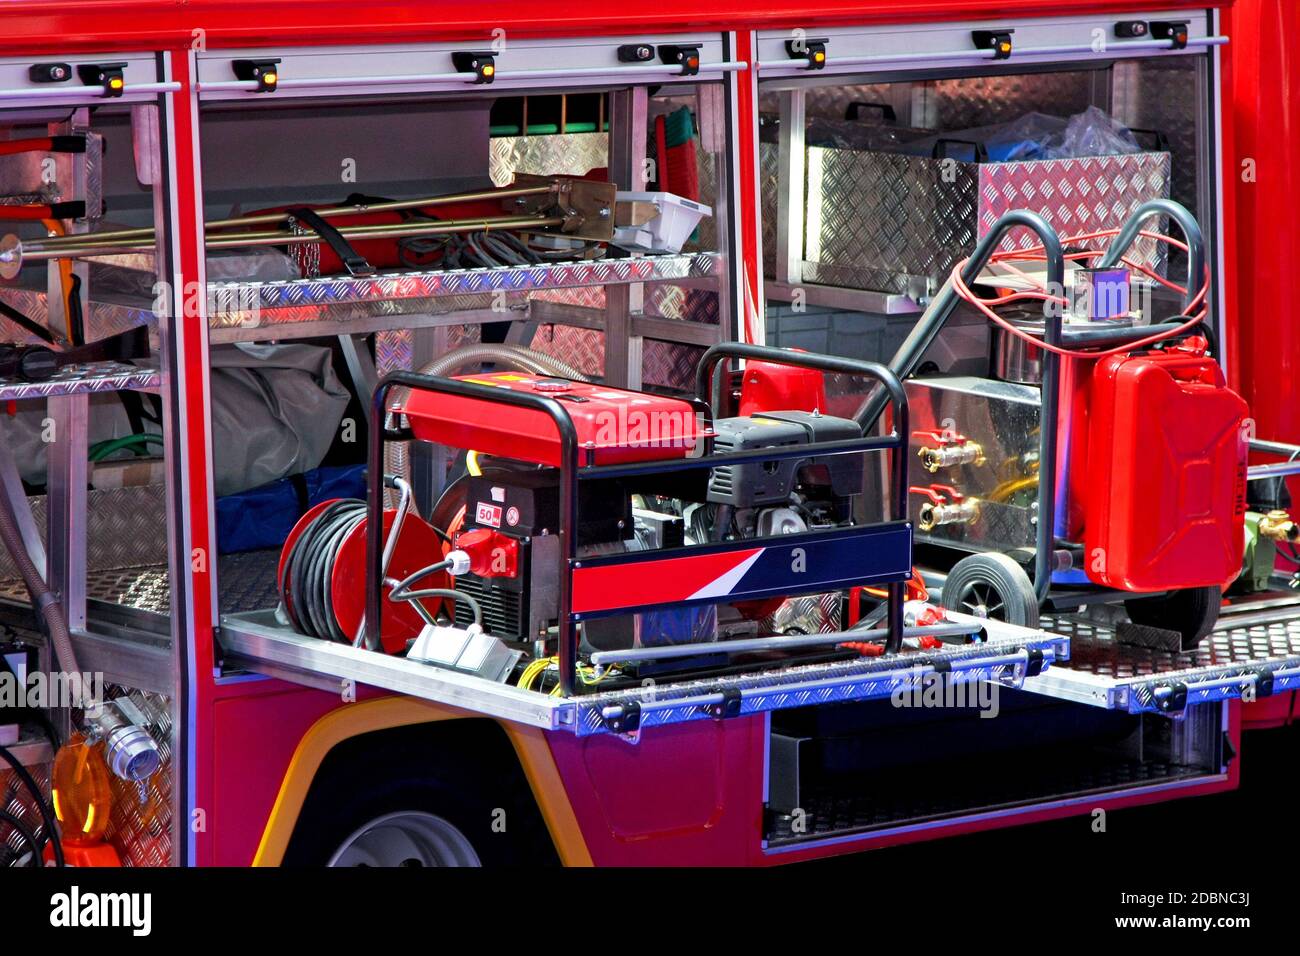 Emergency power generator in fire engine truck Stock Photo